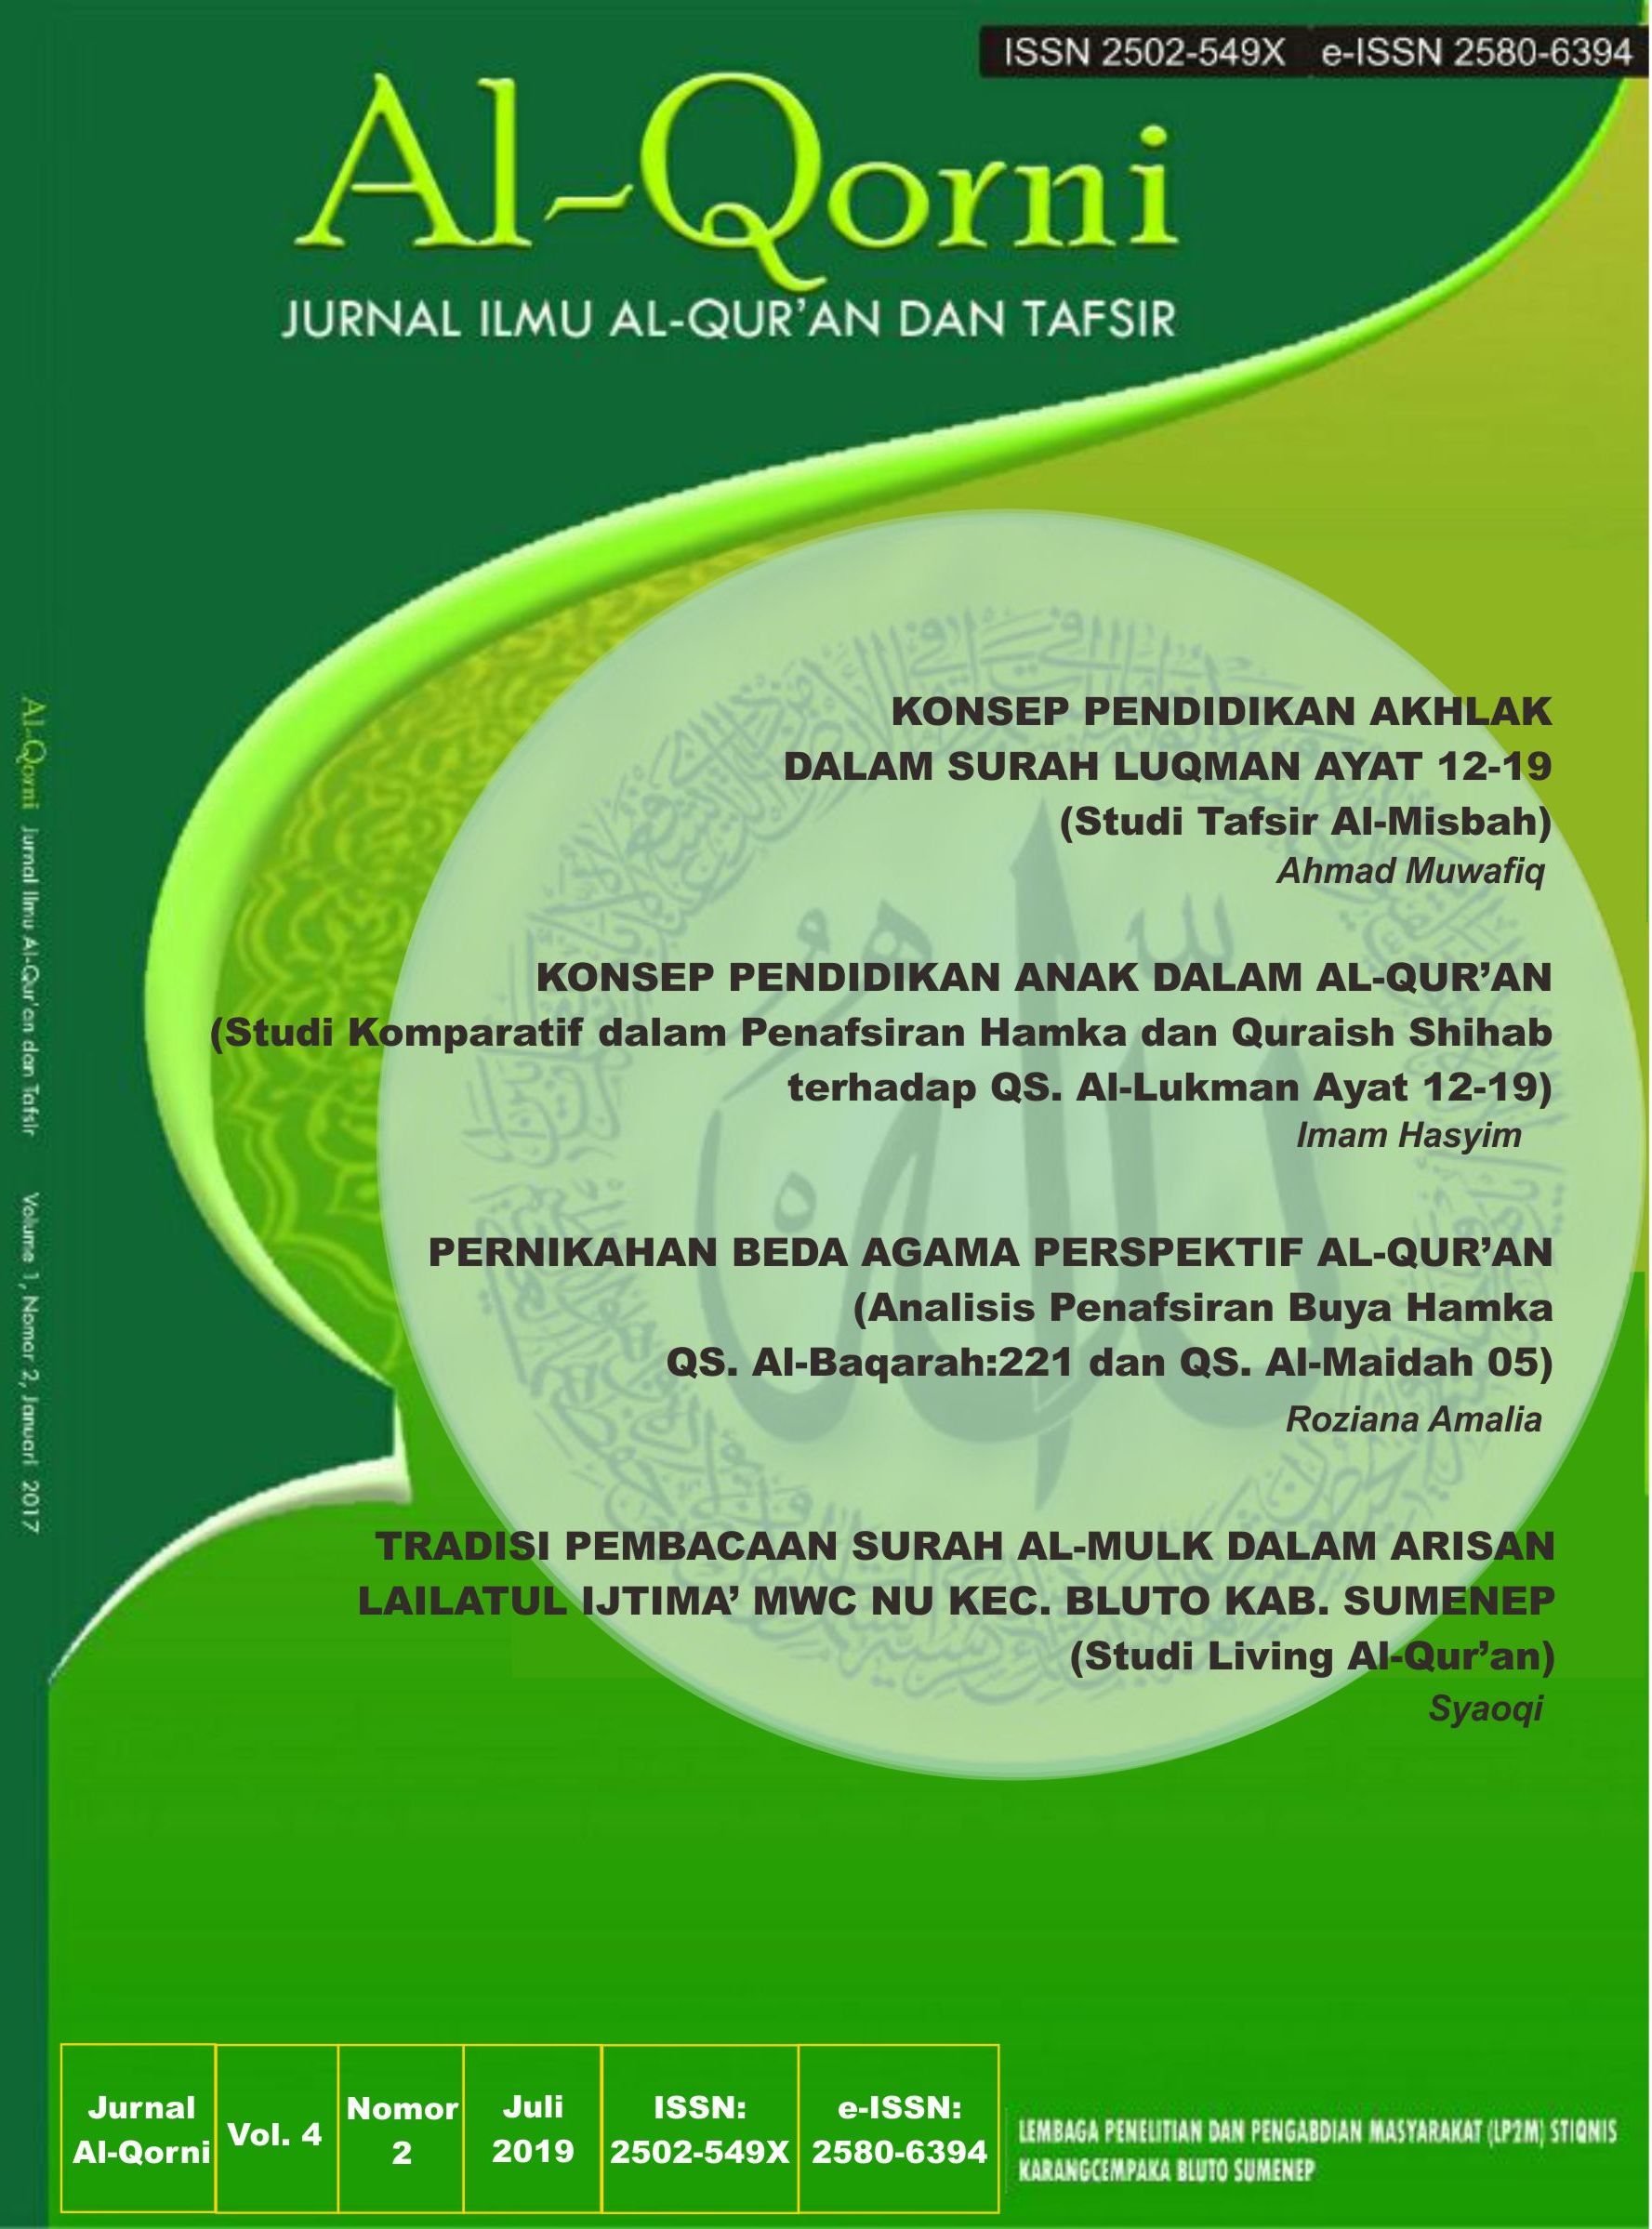 					Lihat Vol 4 No 2 (2019): Jurnal Ilmu Al-Qur'an dan Tafsir
				